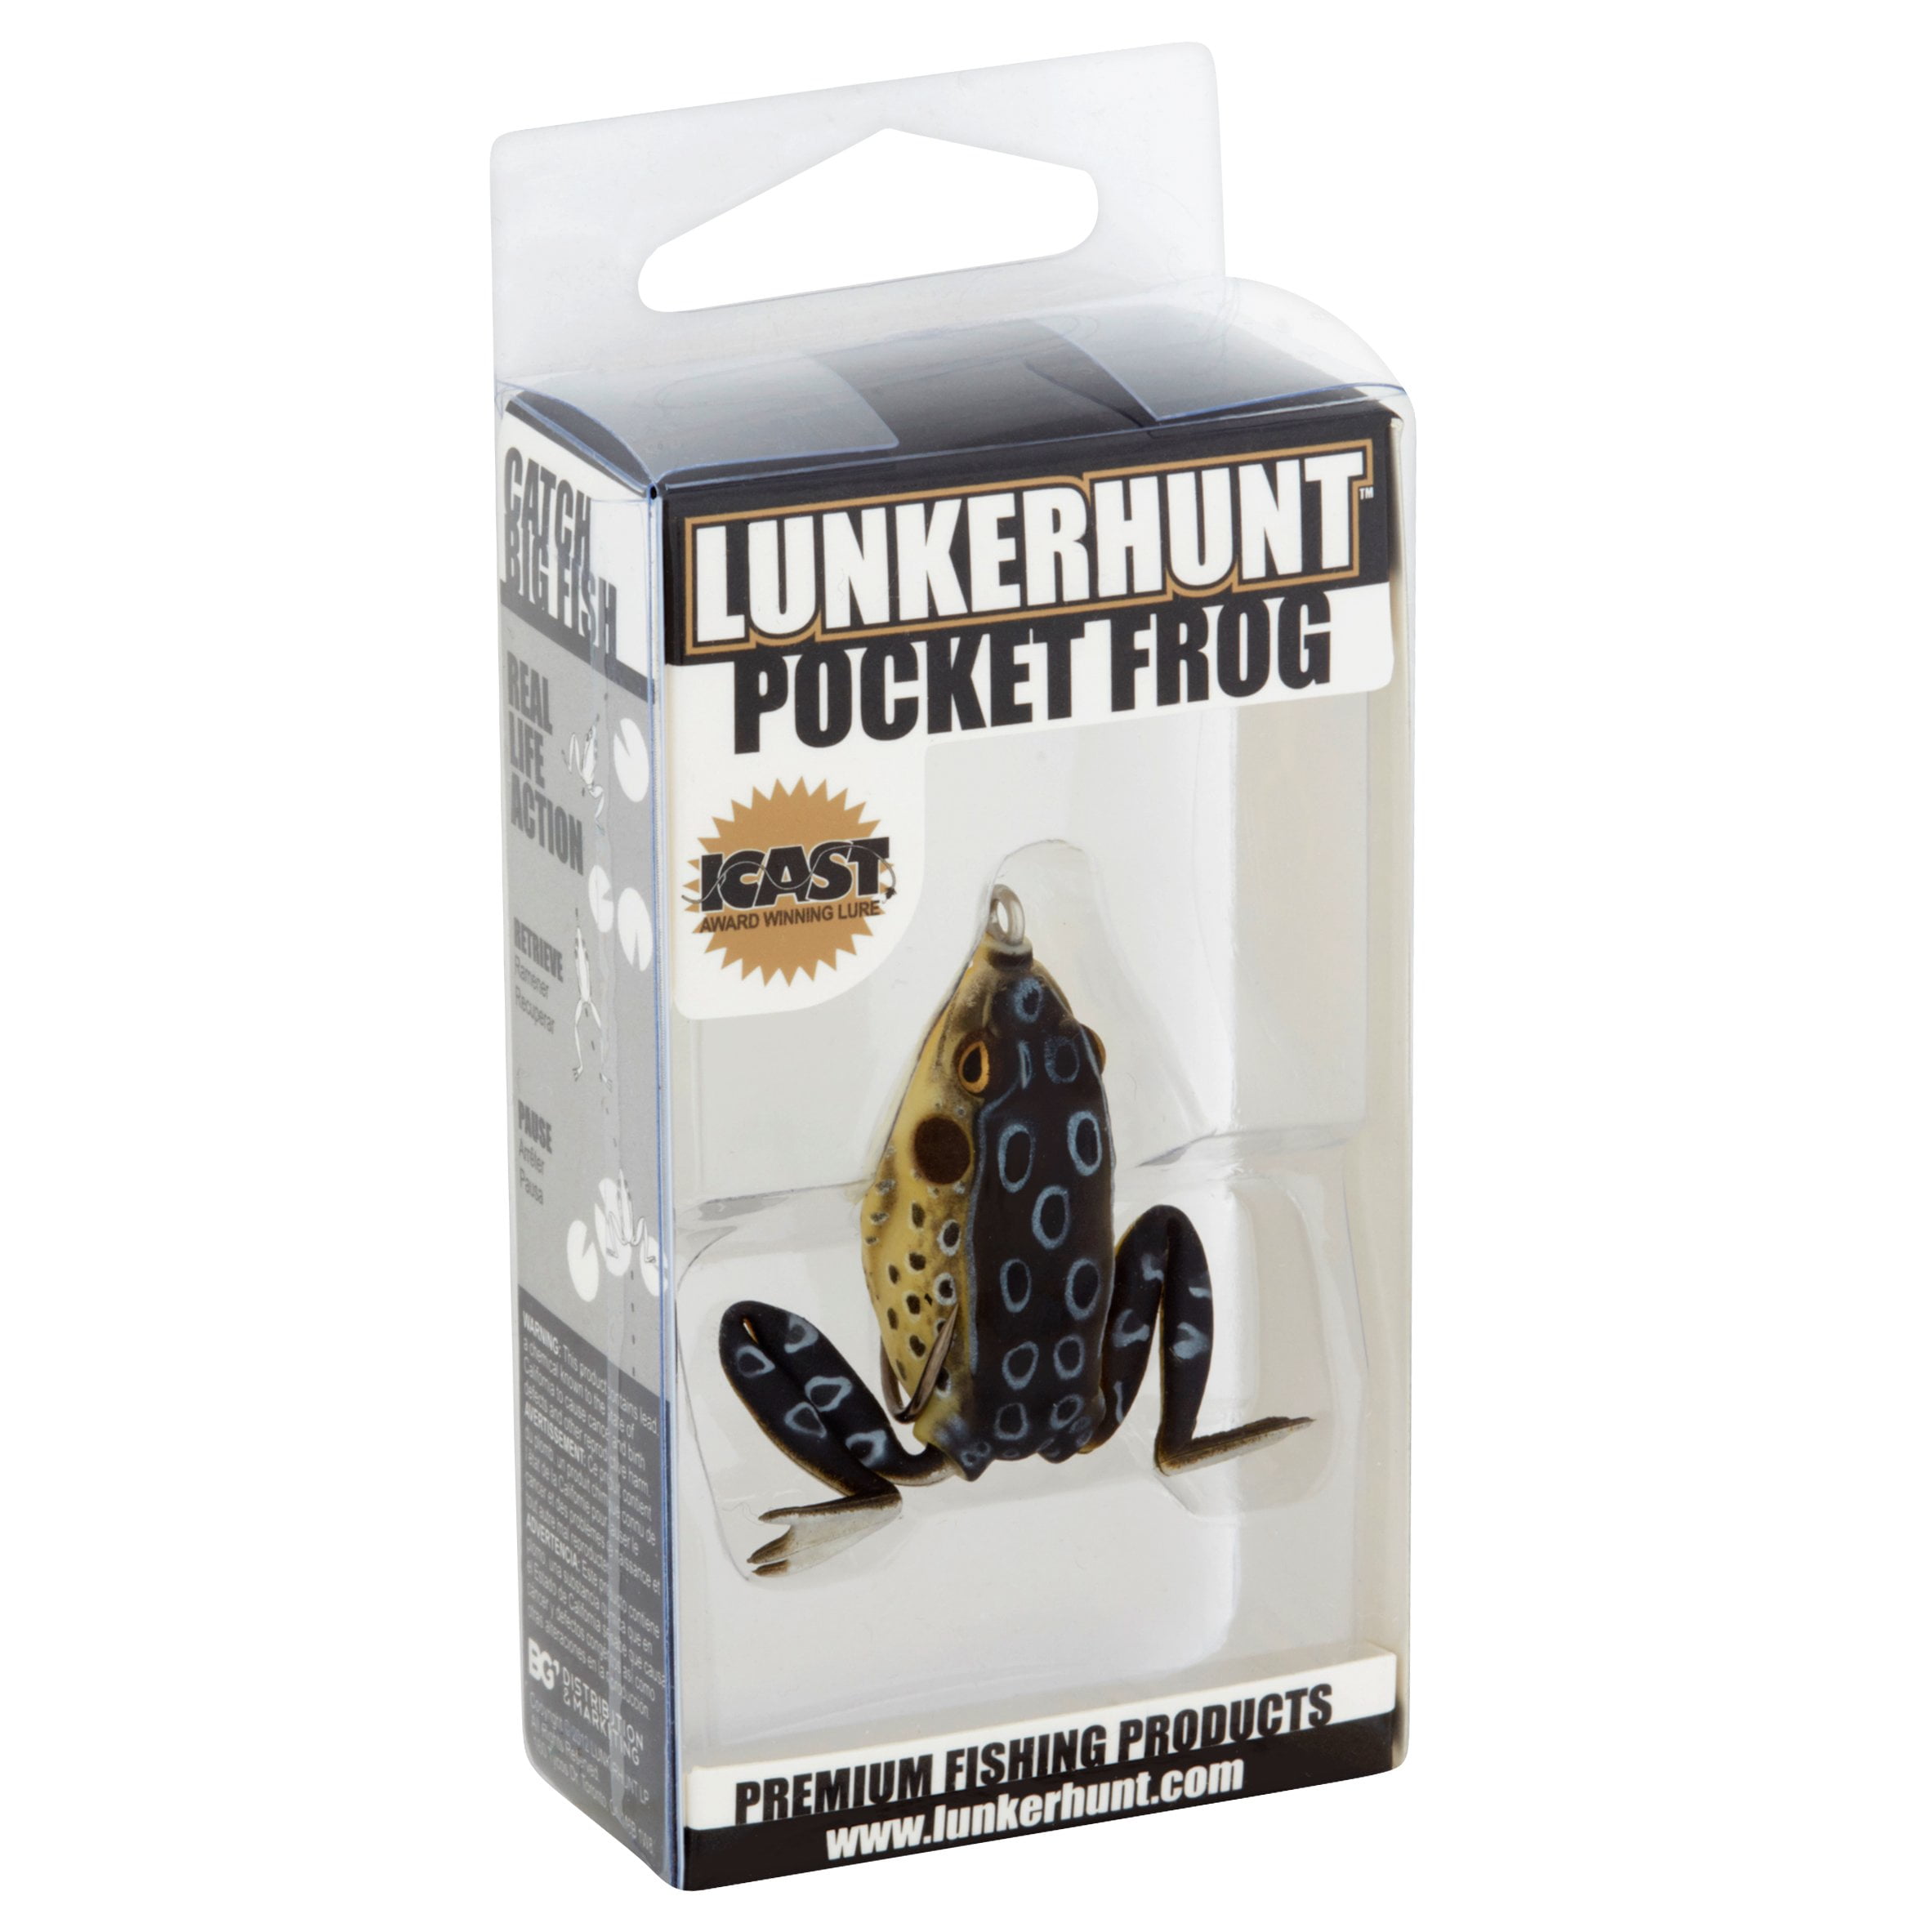 Lunkerhunt Pocket Frog - Topwater Lure - Croaker,1.75in,1/4oz,Soft  Baits,Fishing Lures 